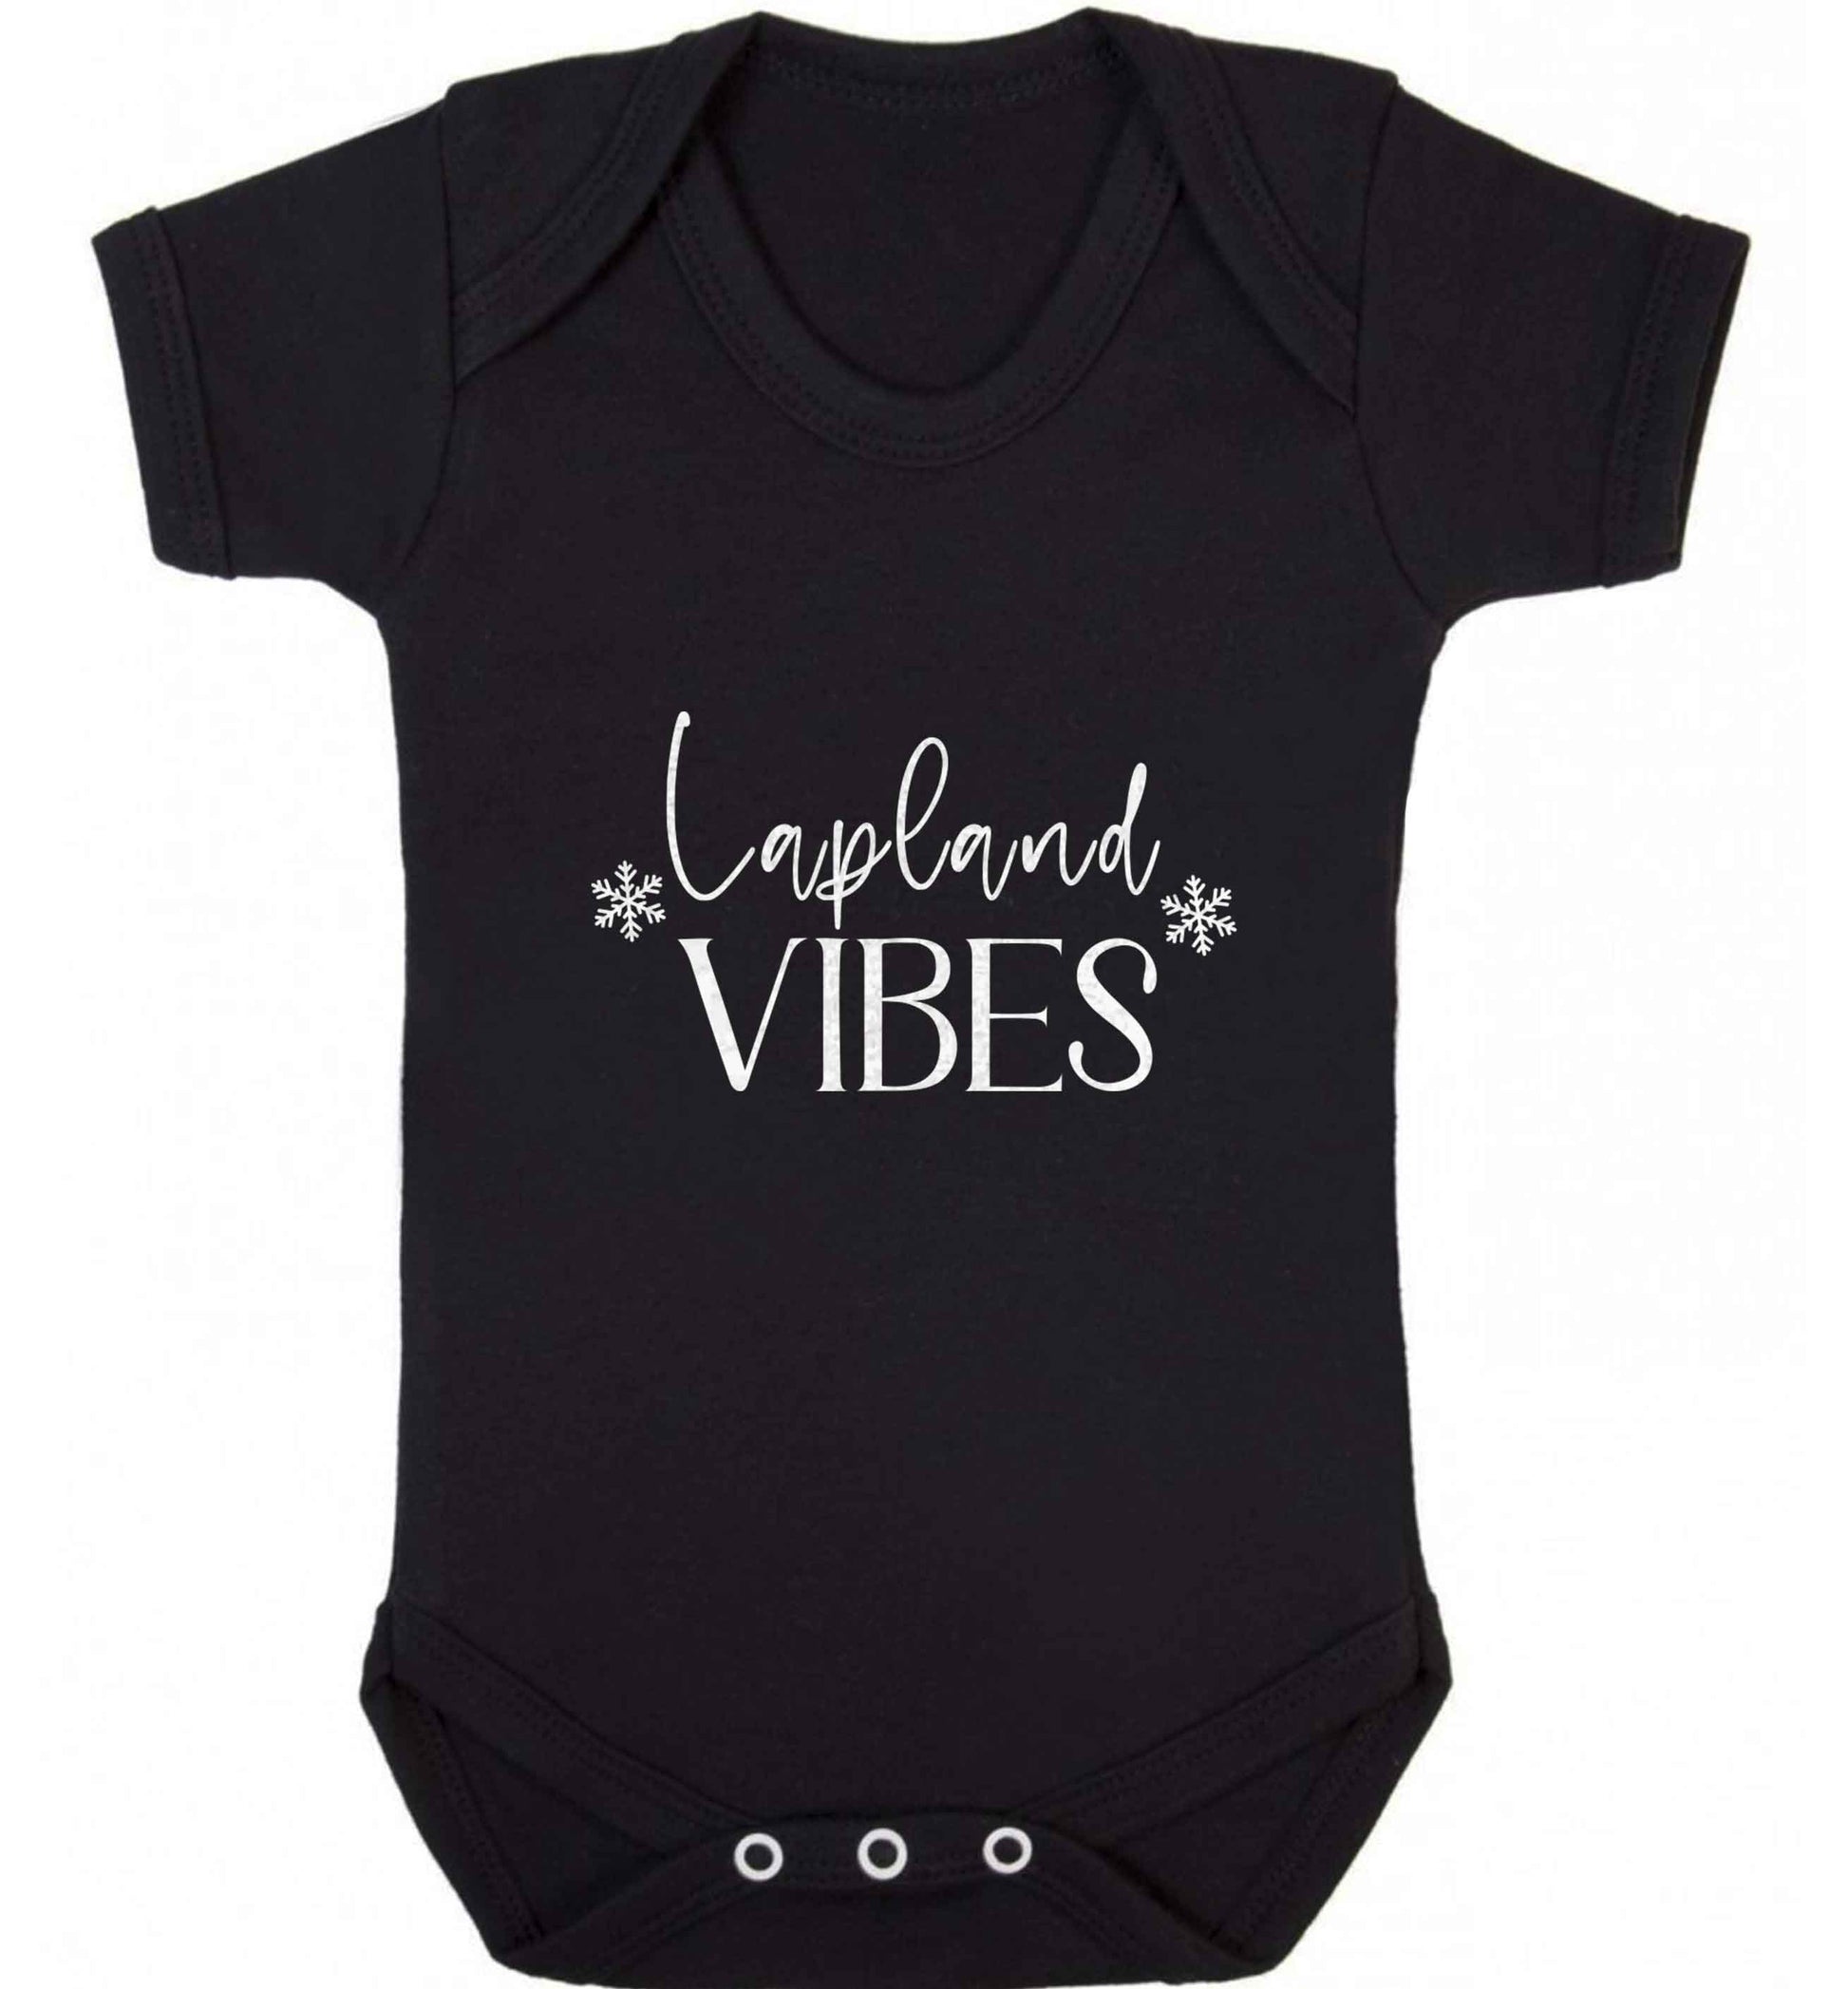 Lapland vibes baby vest black 18-24 months